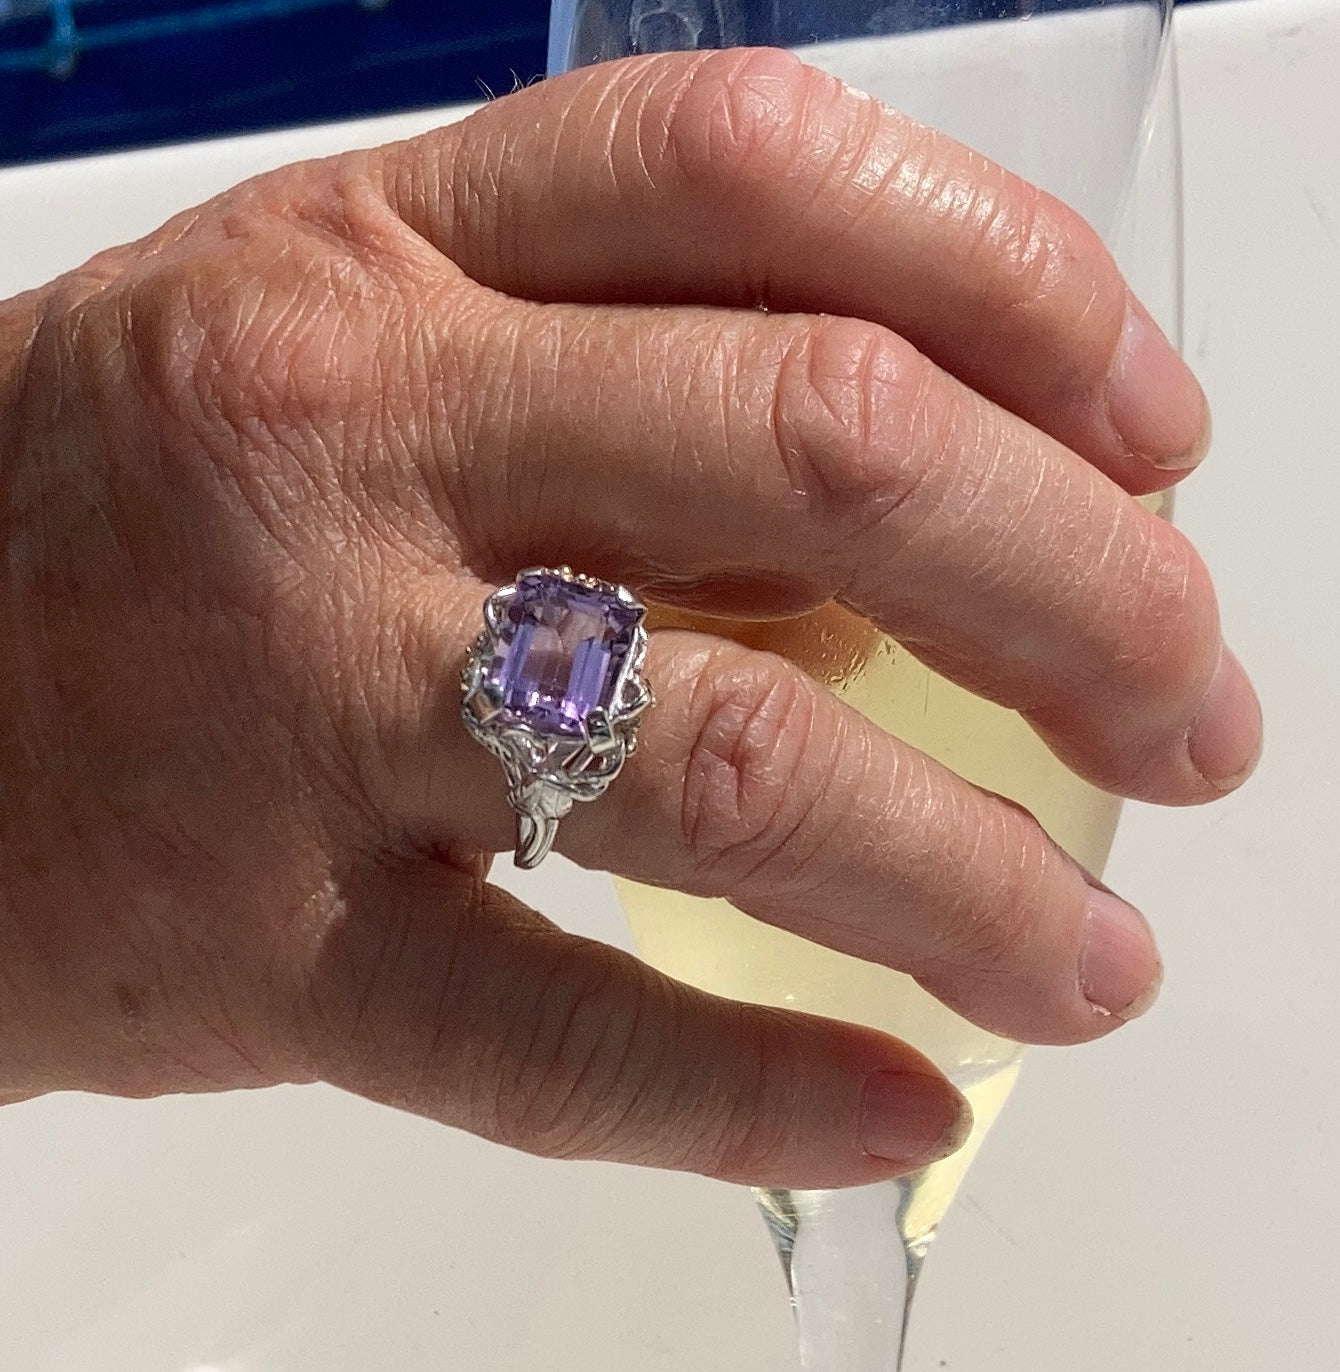 hand wearing purple gemstone cocktail ring, holding wine glass